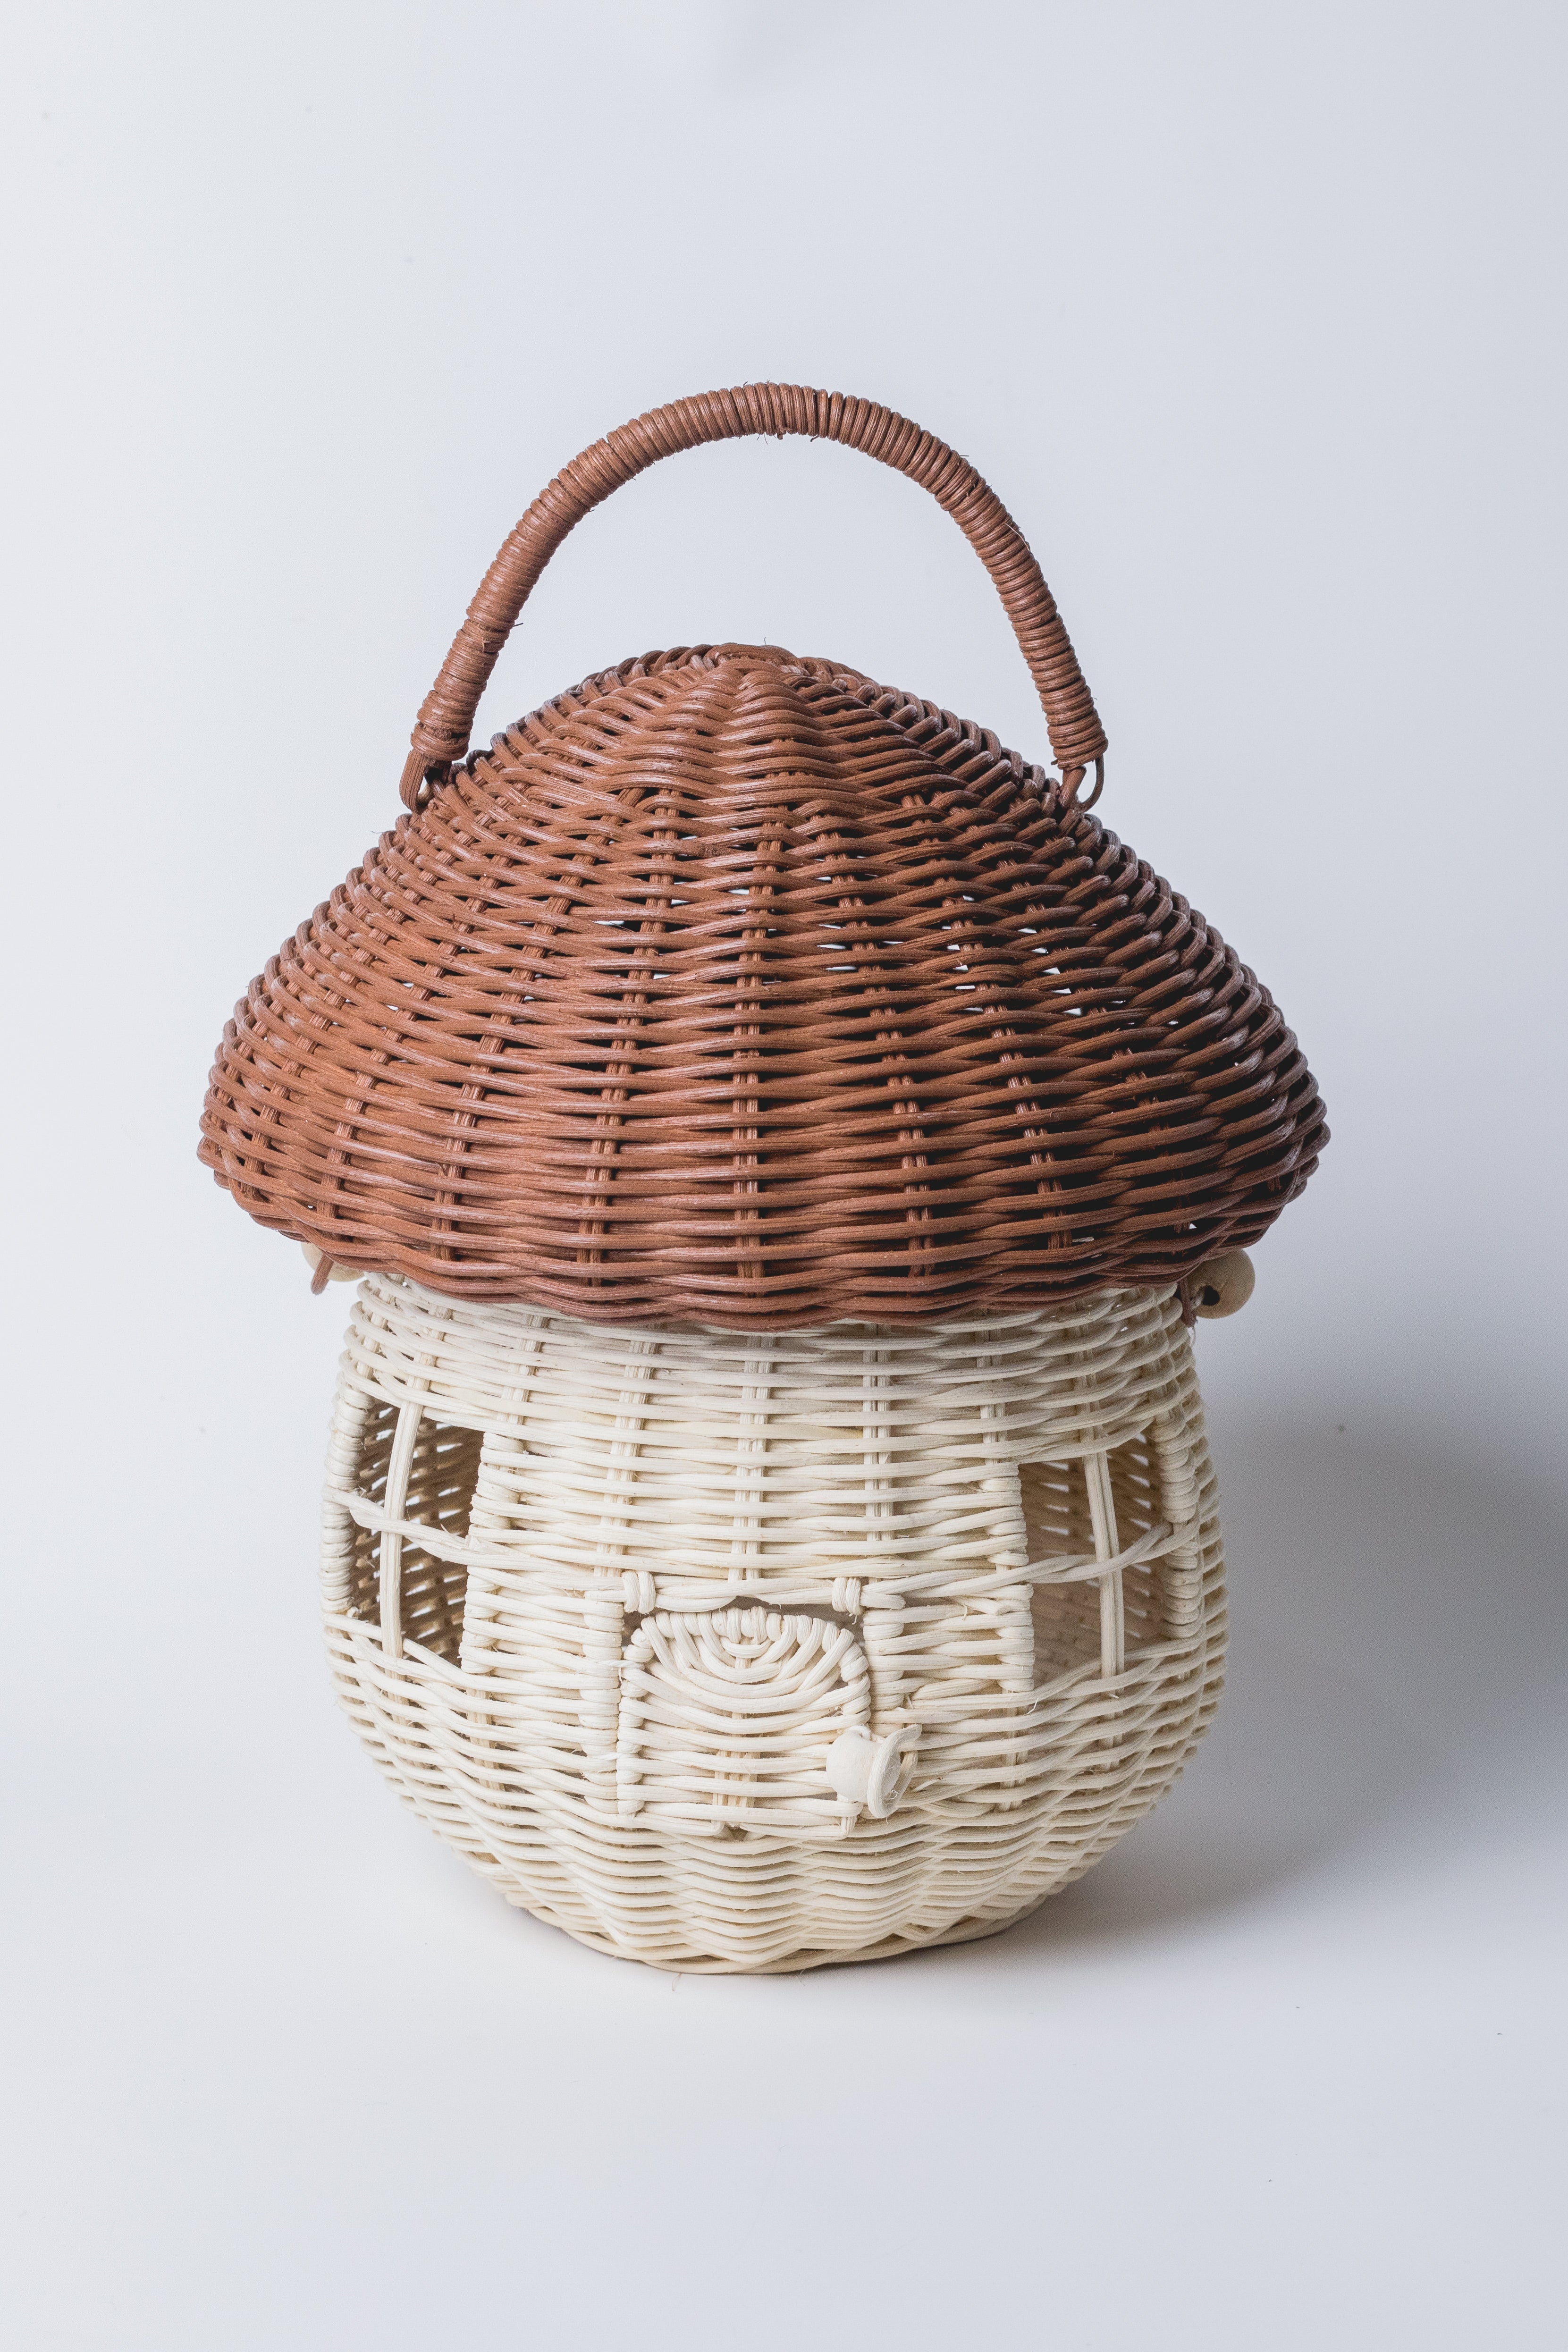 Mushroom House Basket